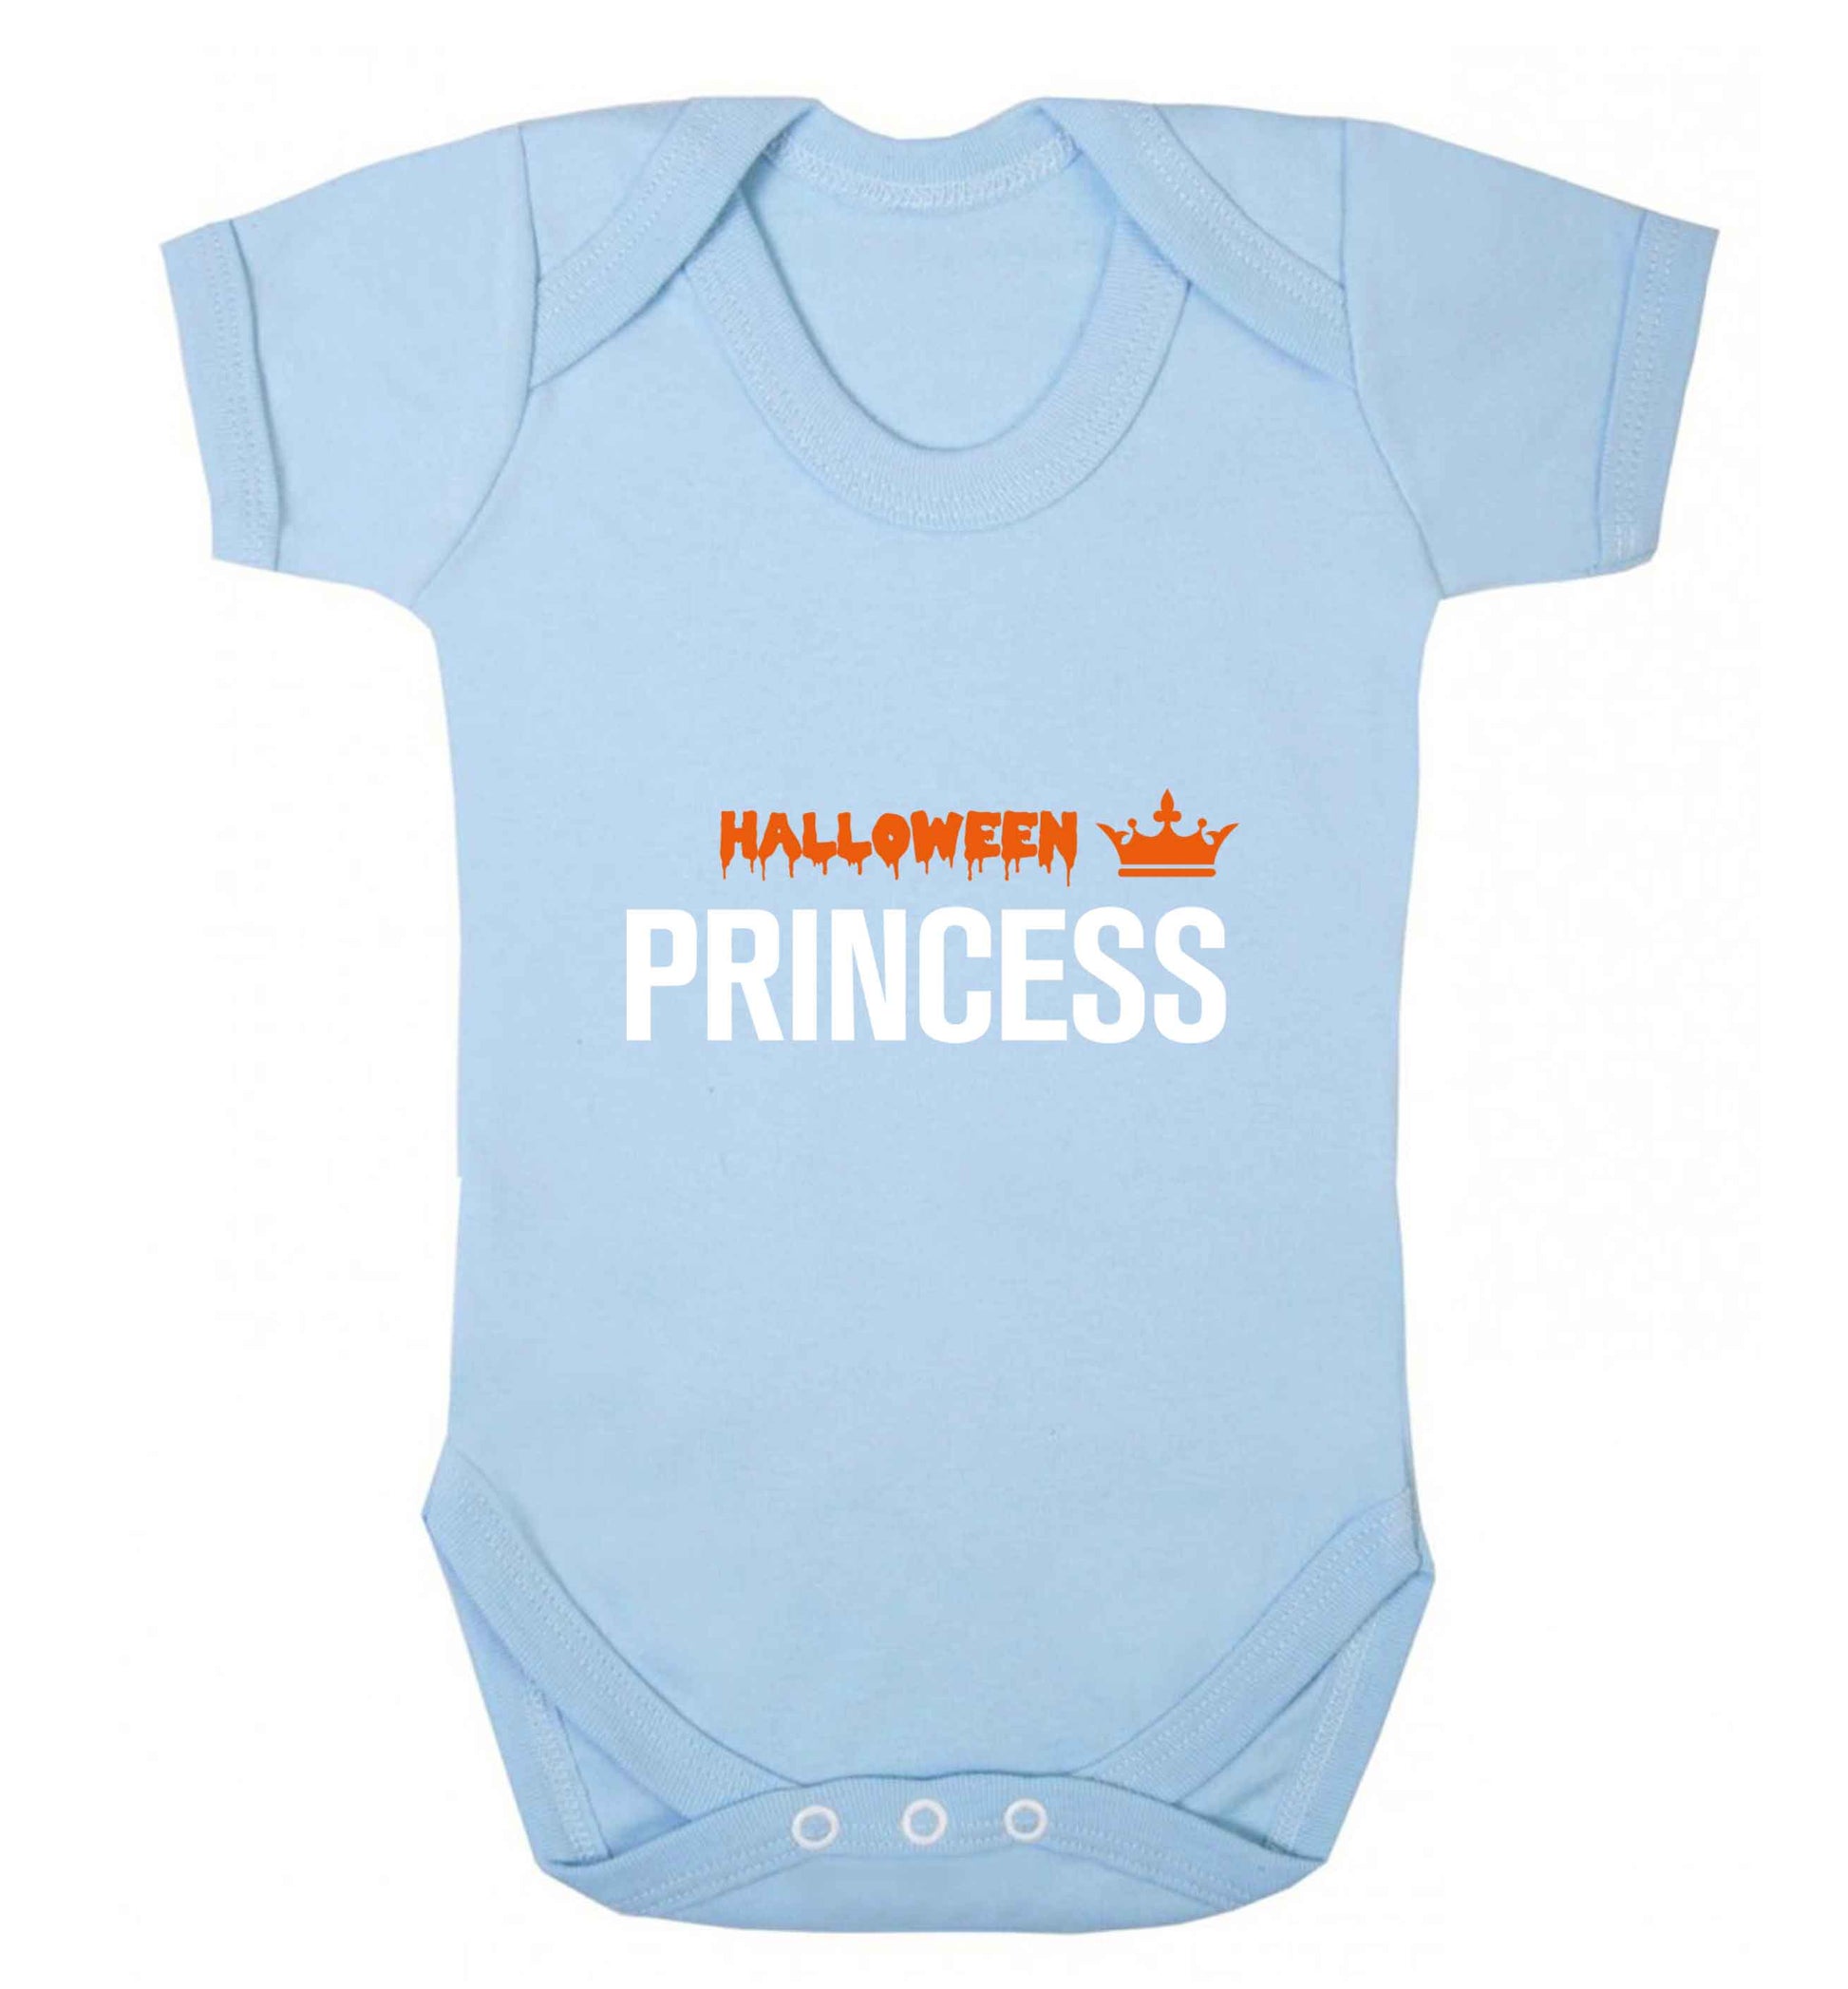 Halloween princess baby vest pale blue 18-24 months